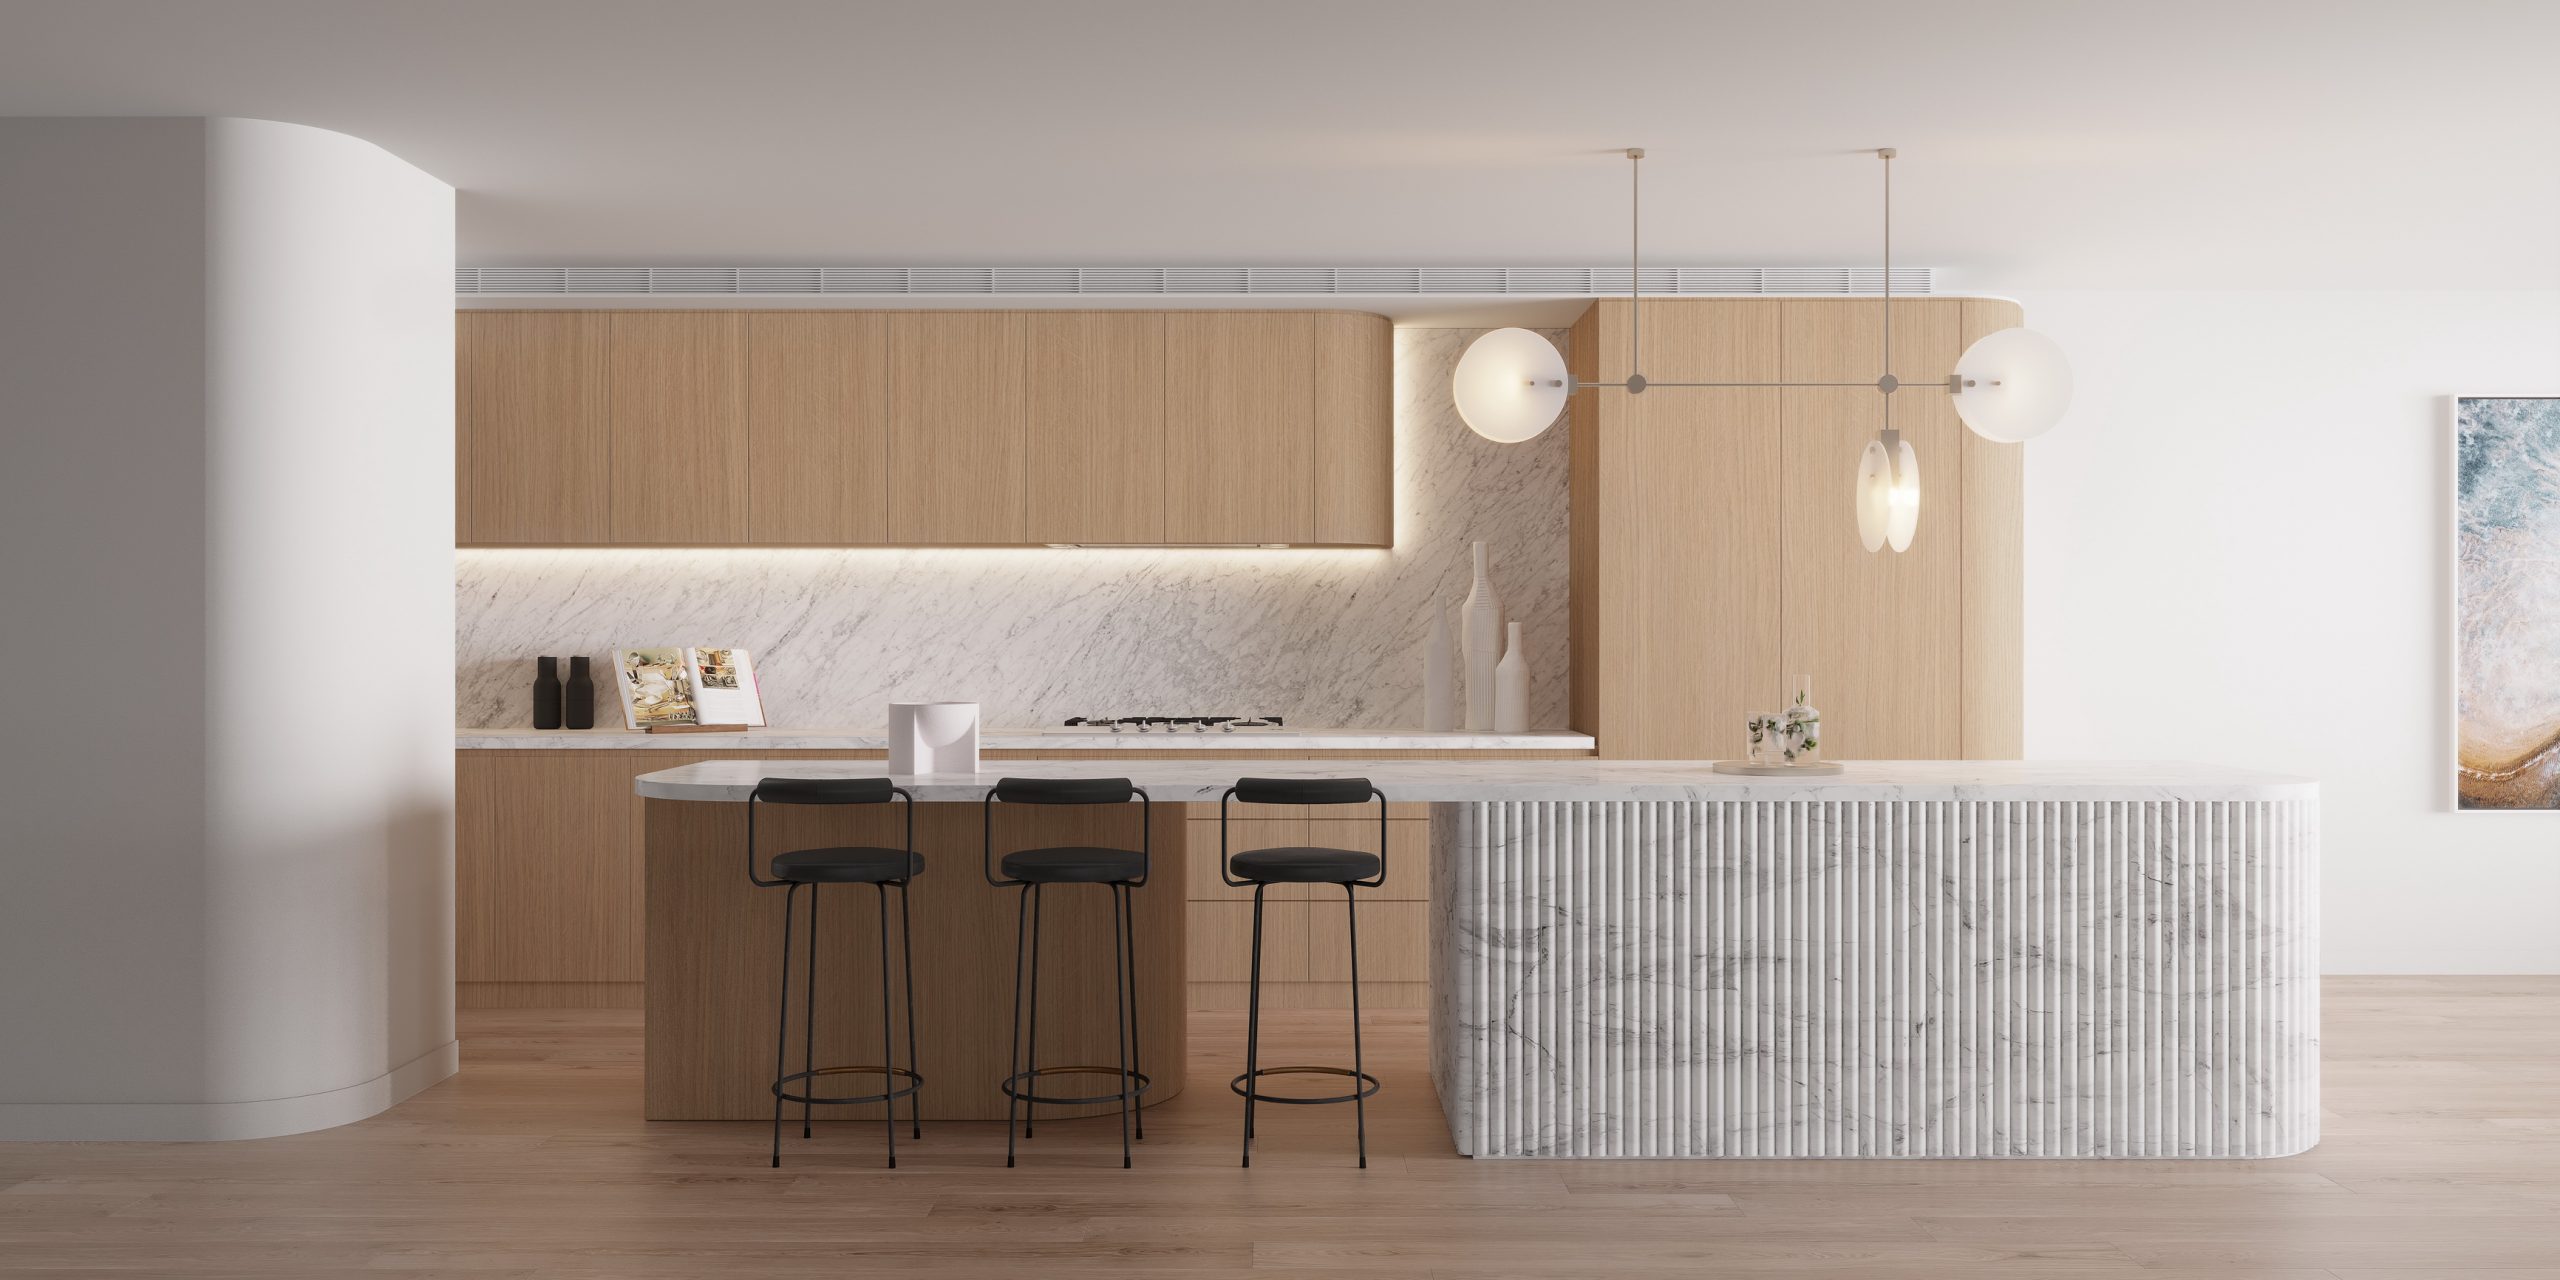 fkd-studio-3d-archiecture-visualisation-cgi-archviz-lorient-interior-kitchen